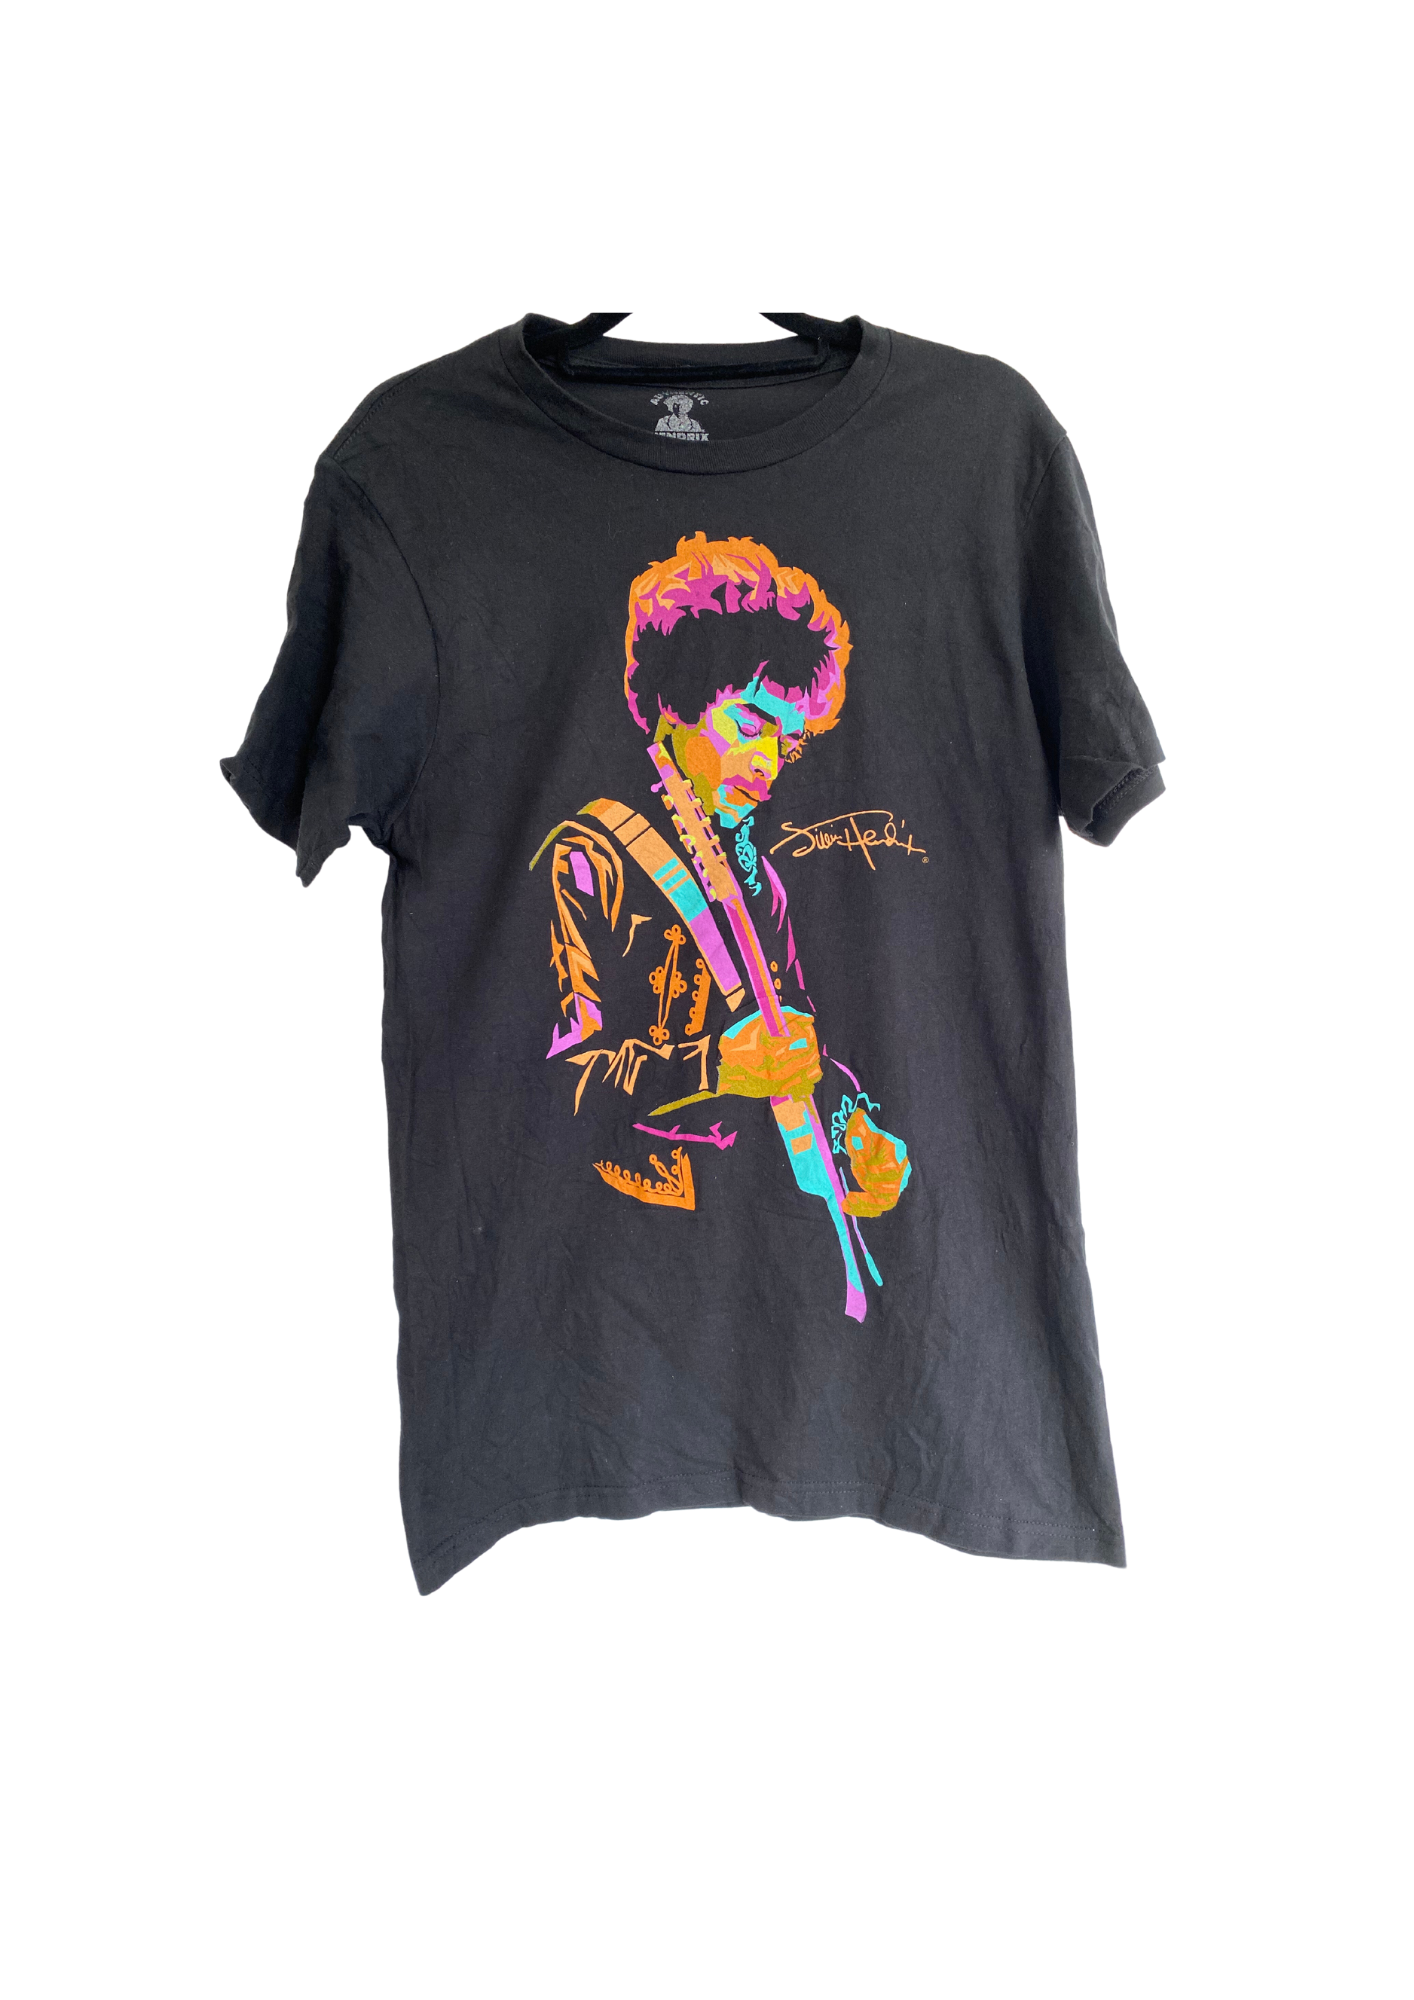 Vintage Jimmy Hendrix T-Shirt